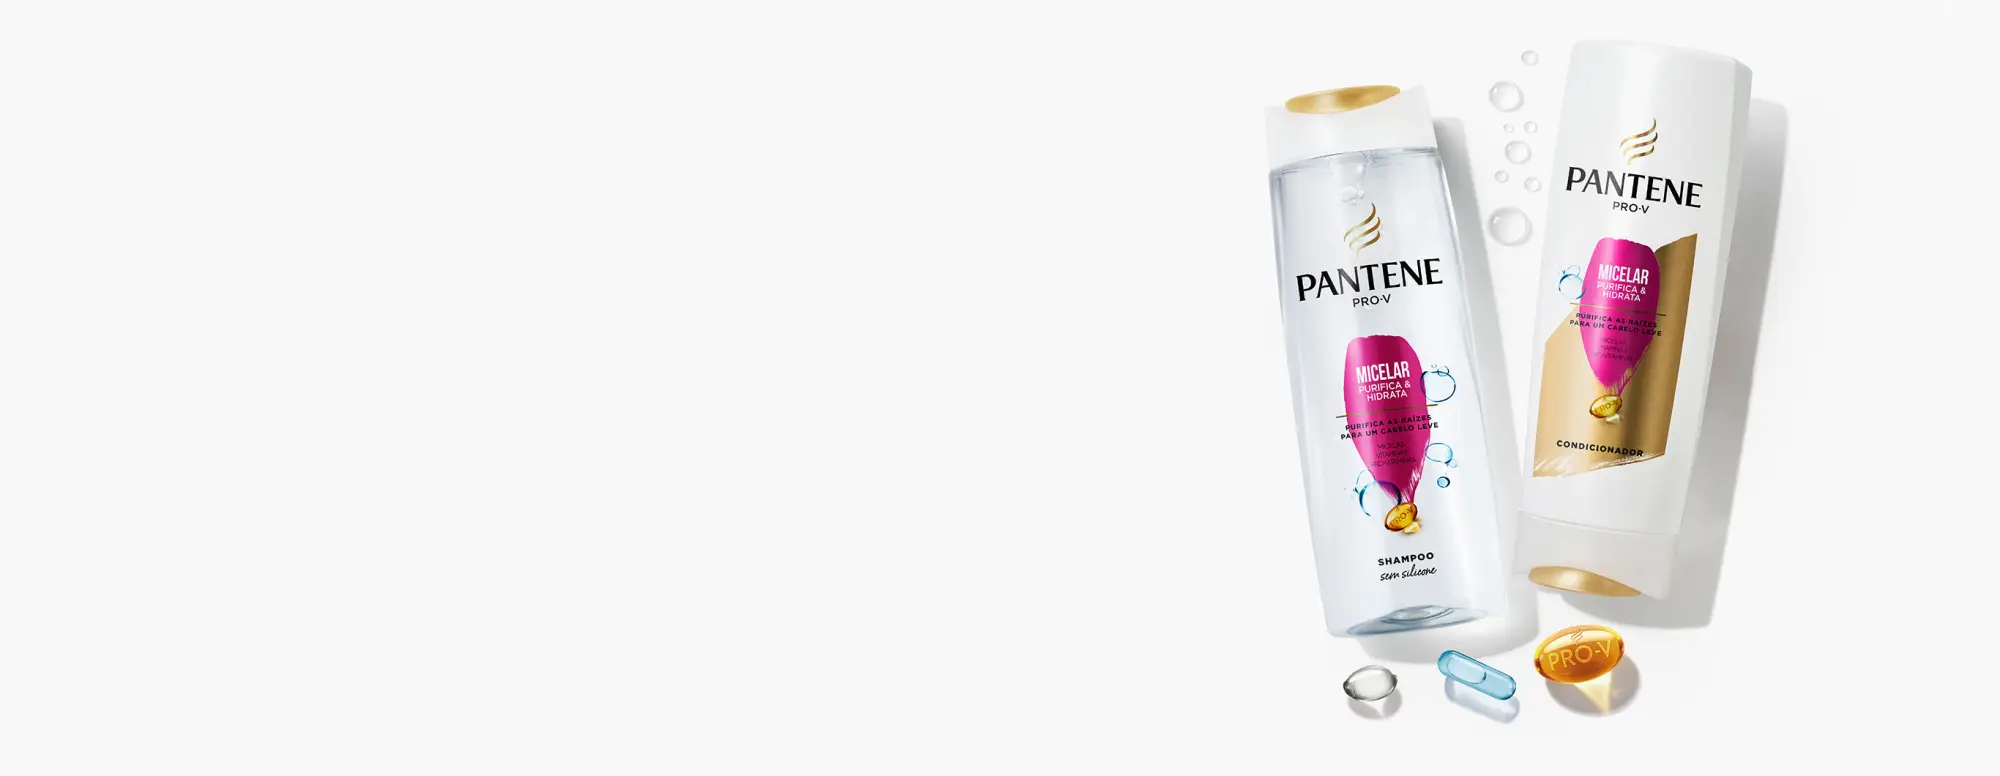 Pantene Pro V Miclear purifica & hidrata para um cabelo leve